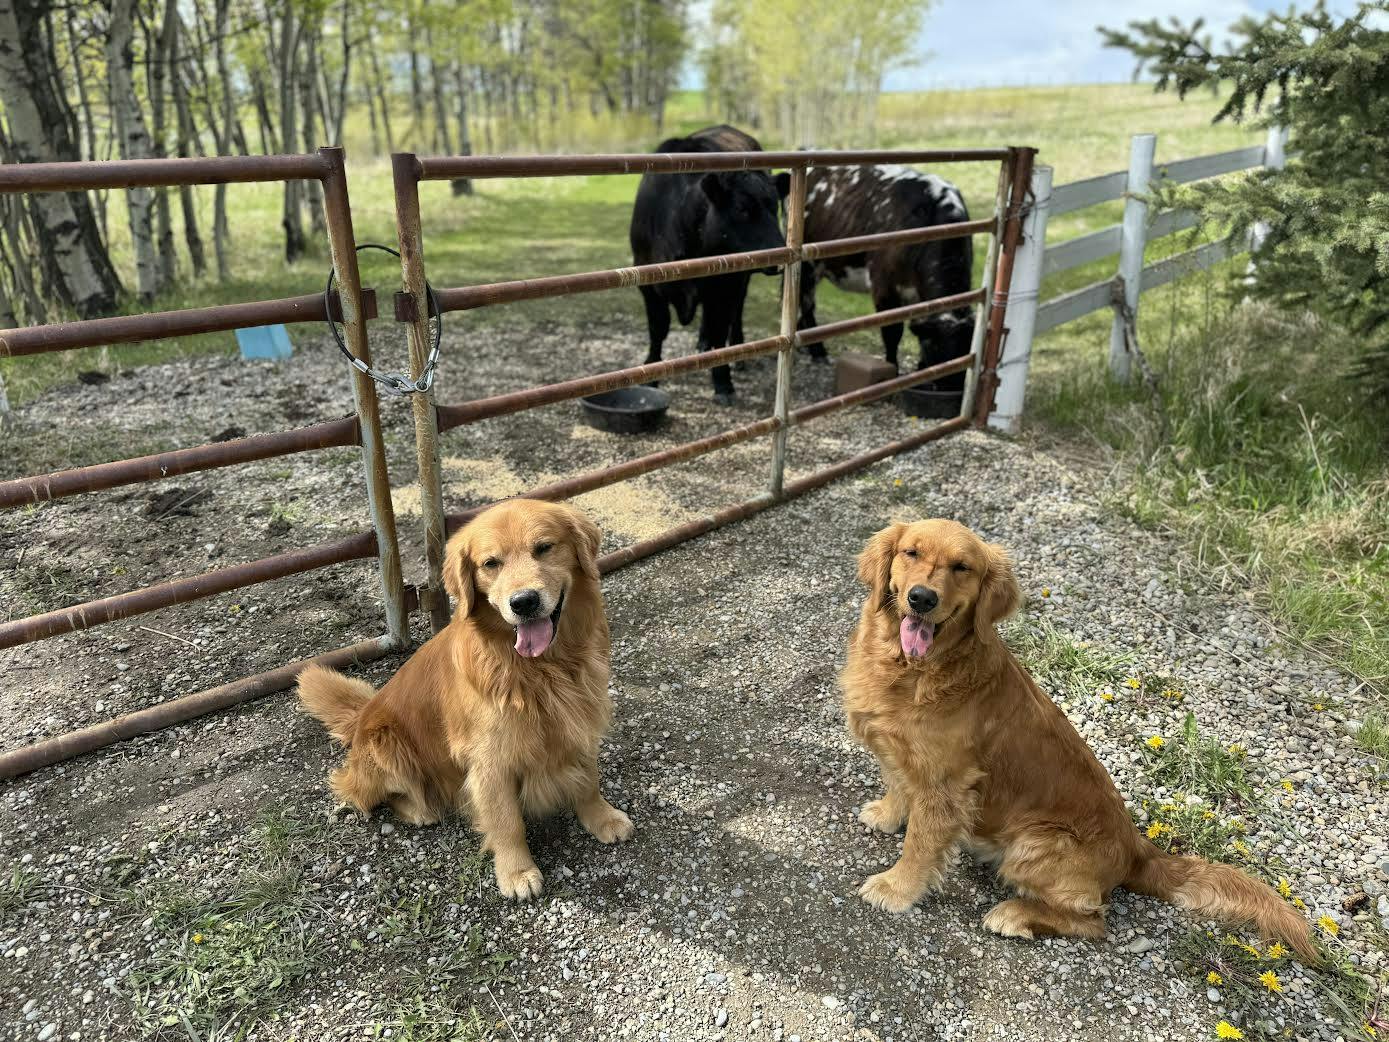 Ember and Joy Golden Retrievers on a farm